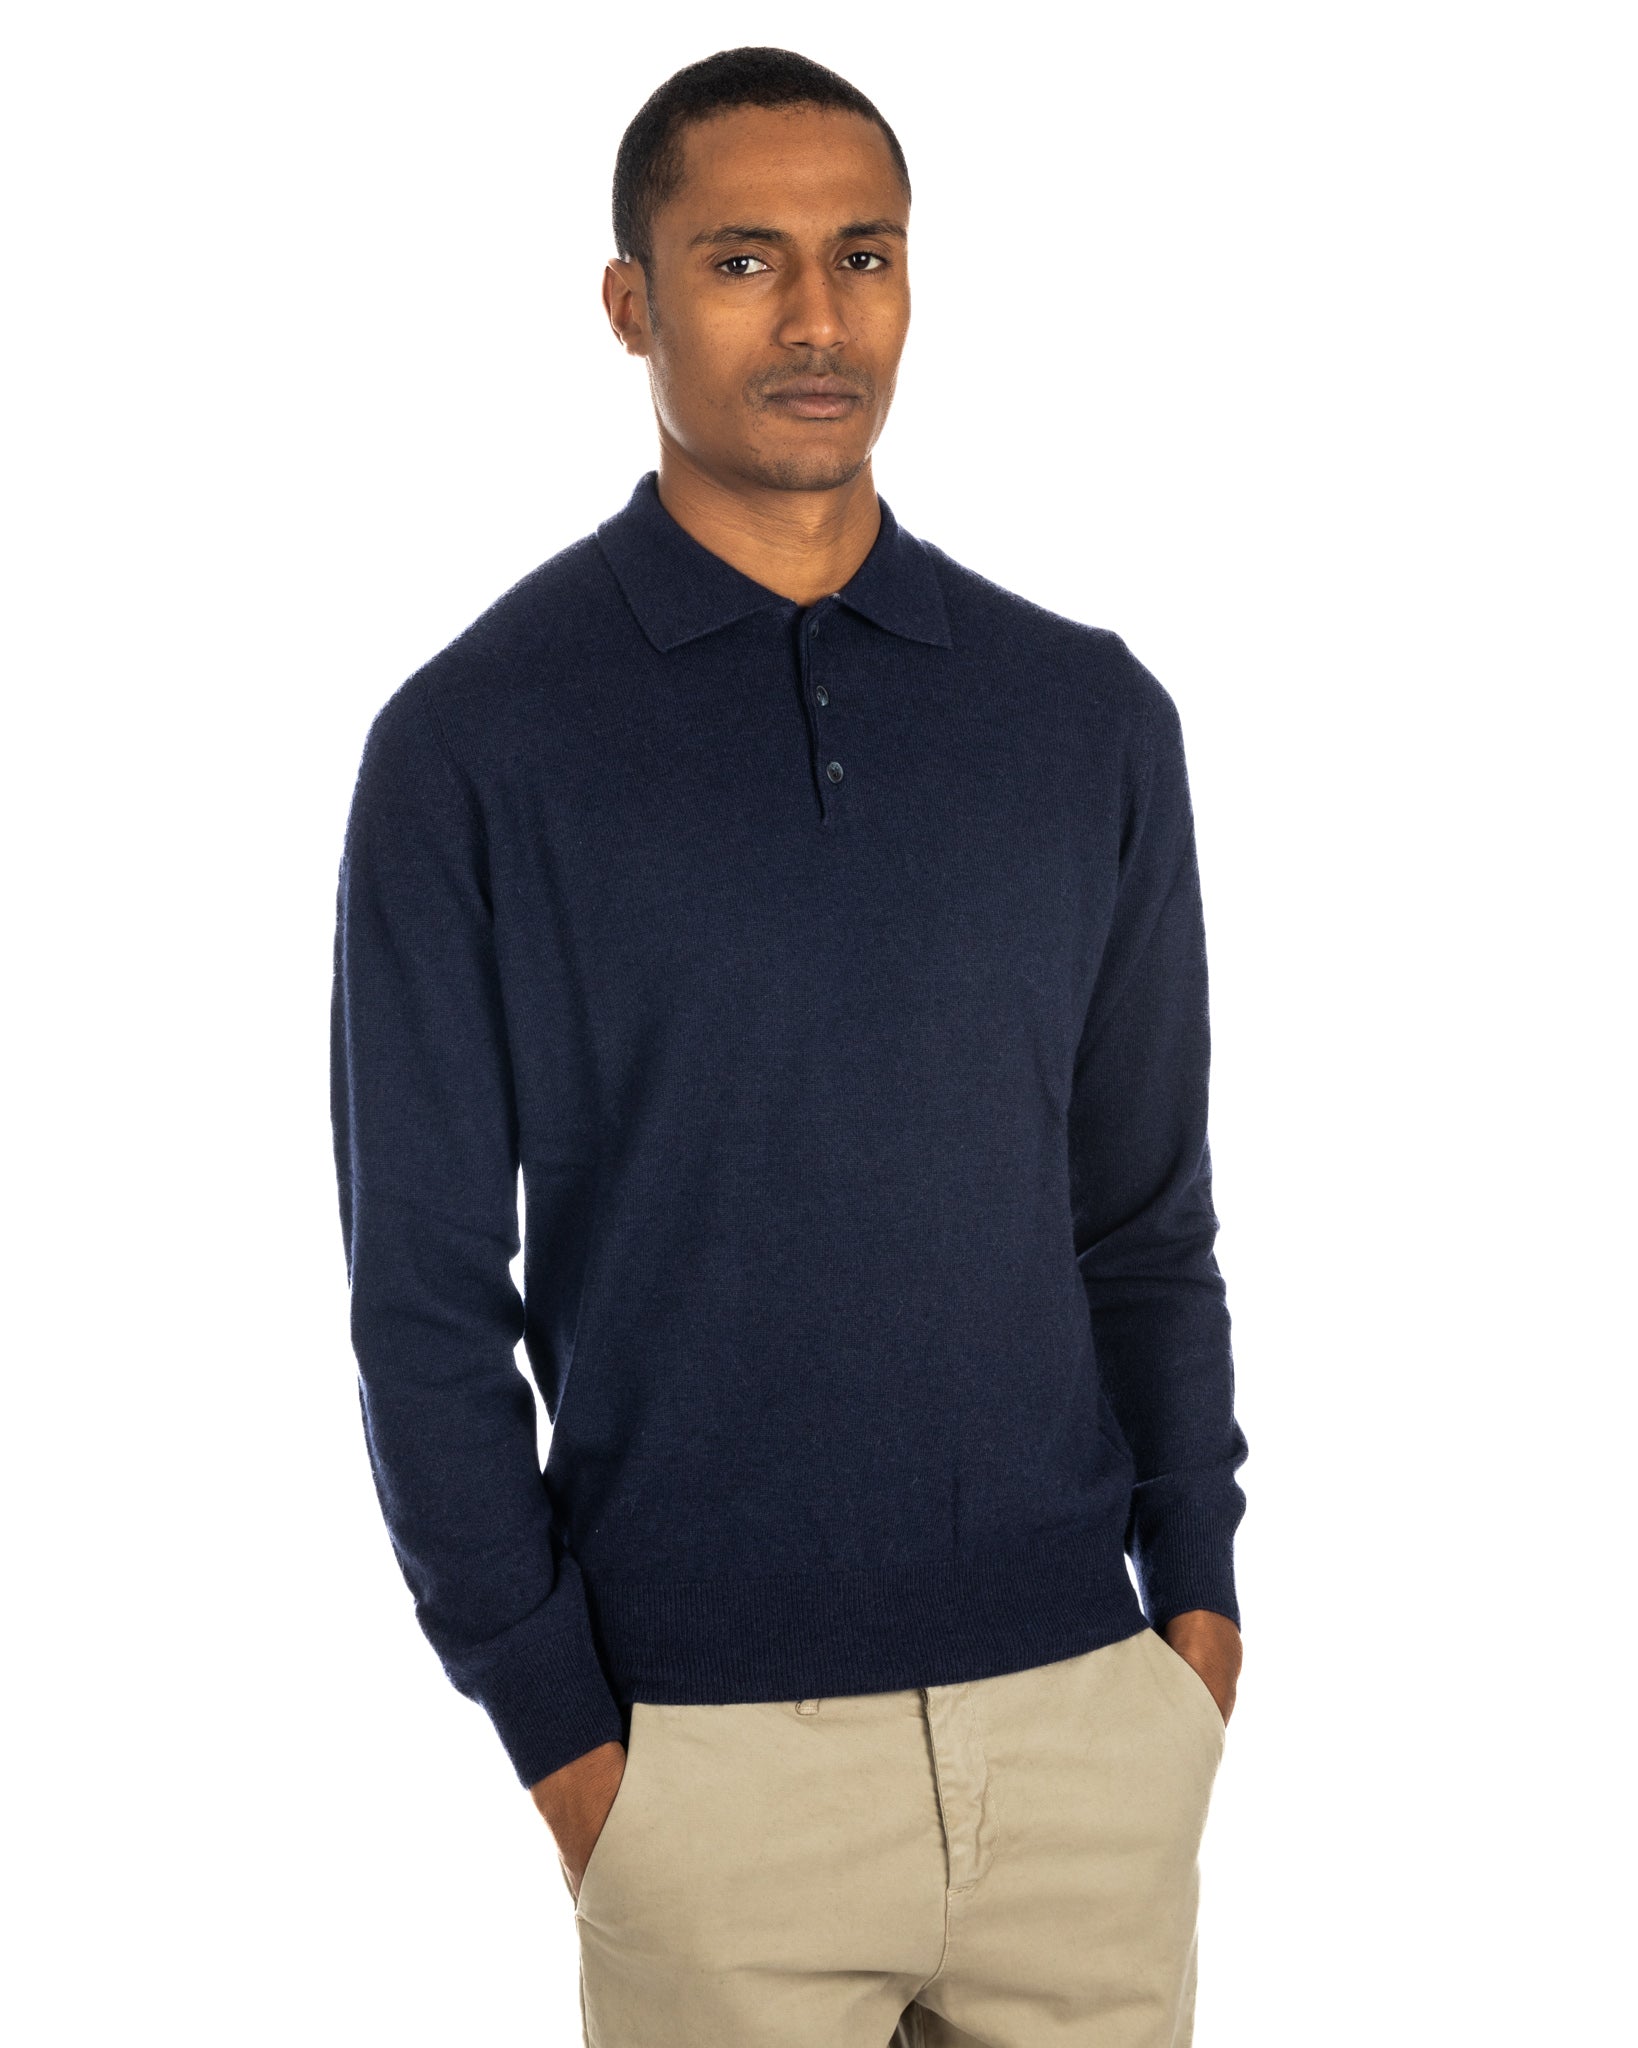 Tiger - blue cashmere blend polo shirt